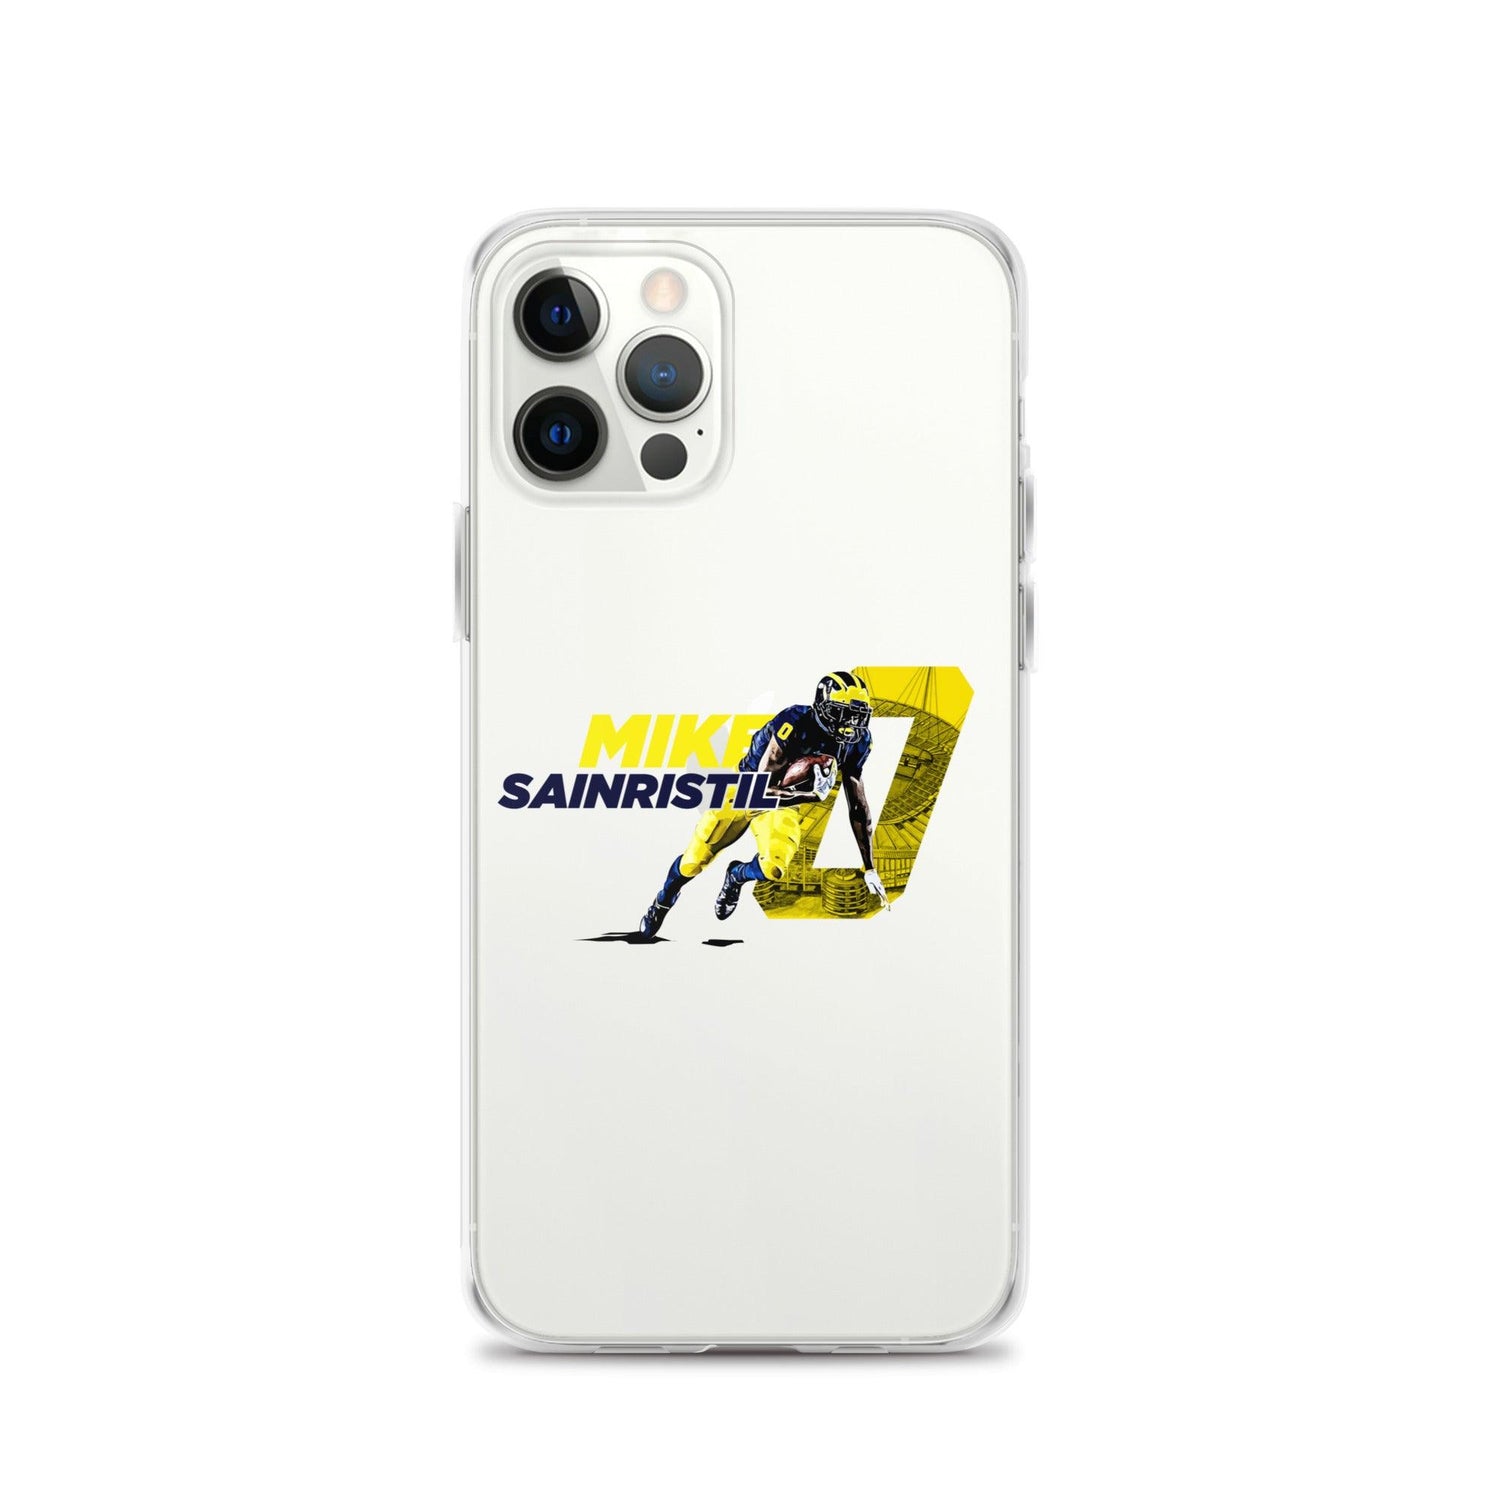 Mike Sainristil "Gameday" iPhone Case - Fan Arch